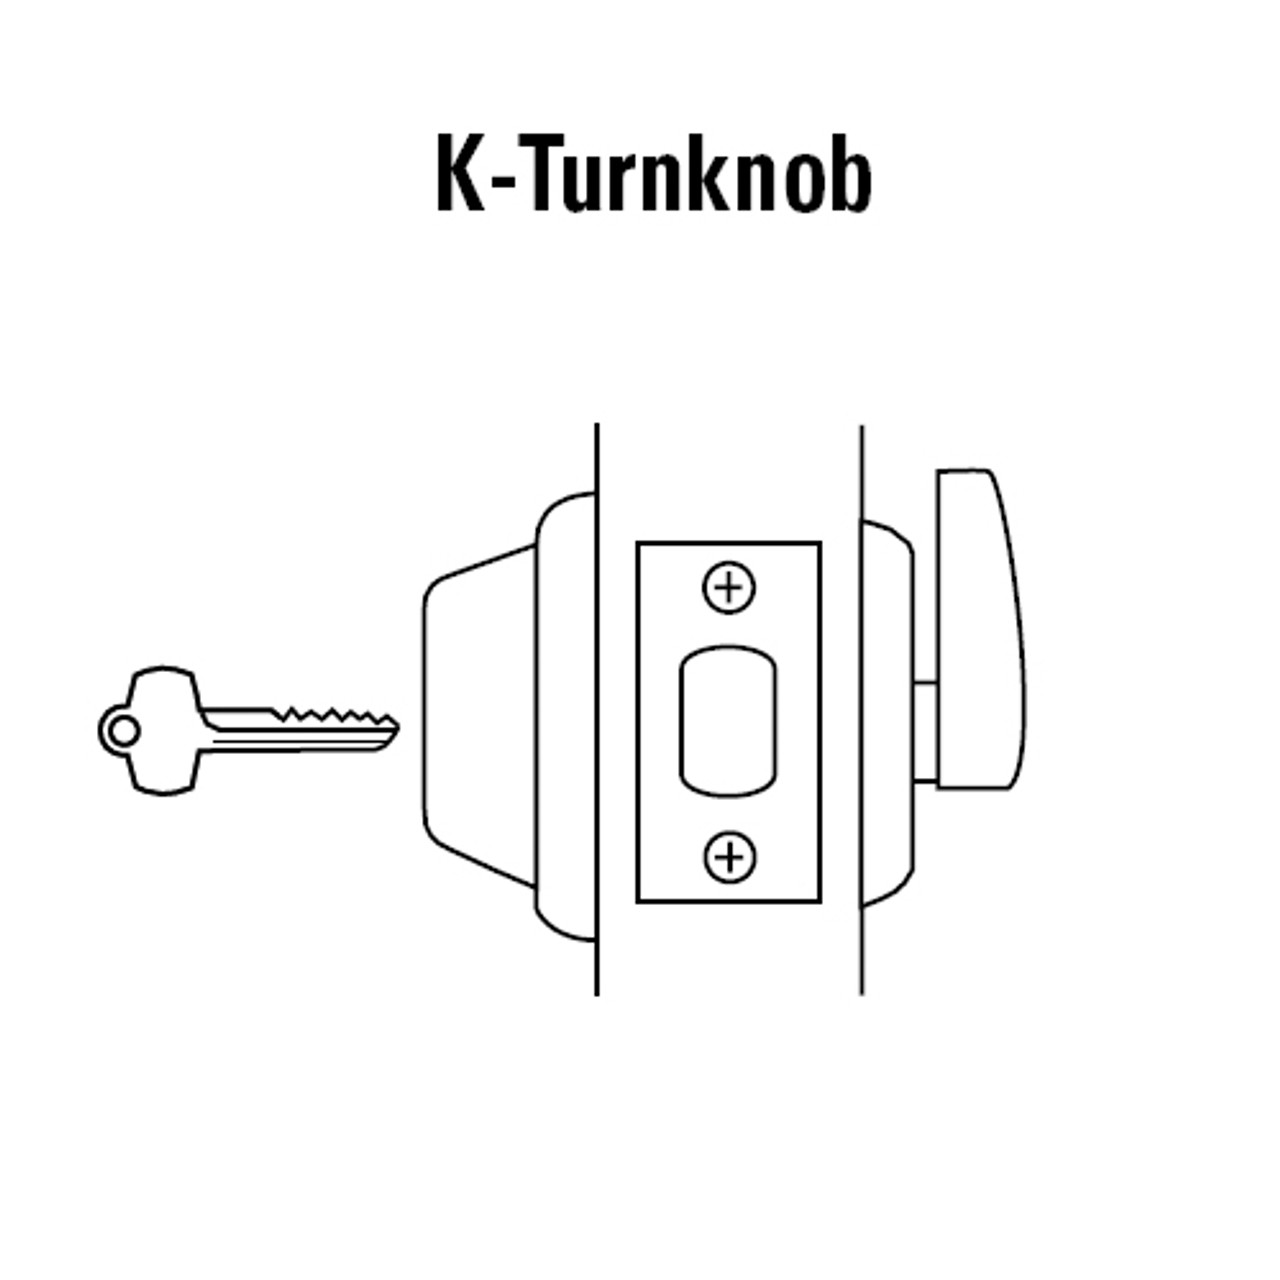 8T27KSTK613D5 Best T Series Single-Keyed with Turnknob Tubular Standard Deadbolt in Oil Rubbed Bronze